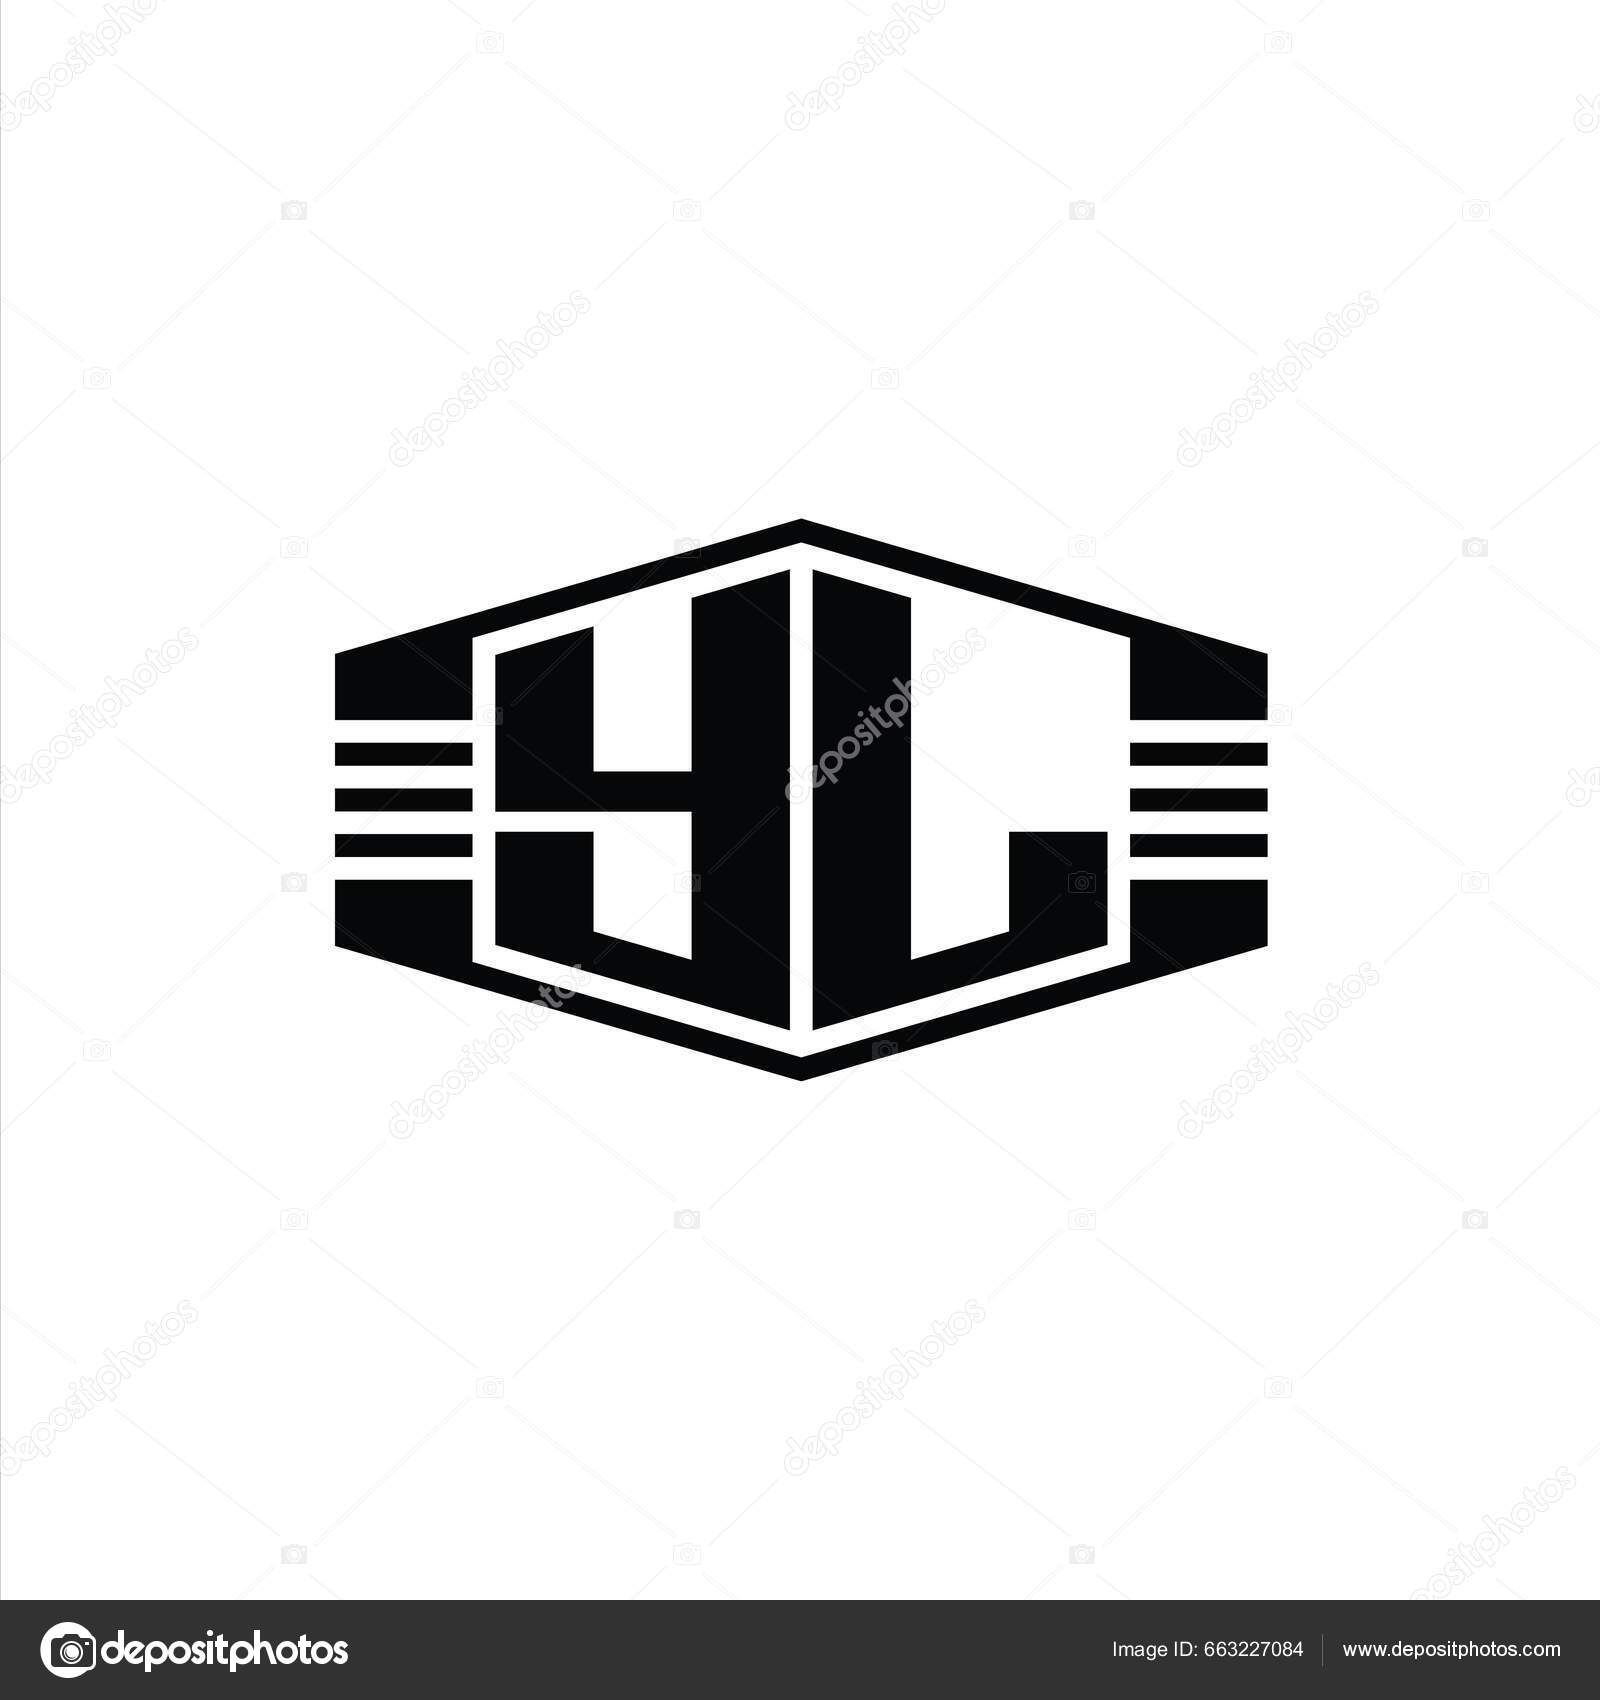 monogram yl logo